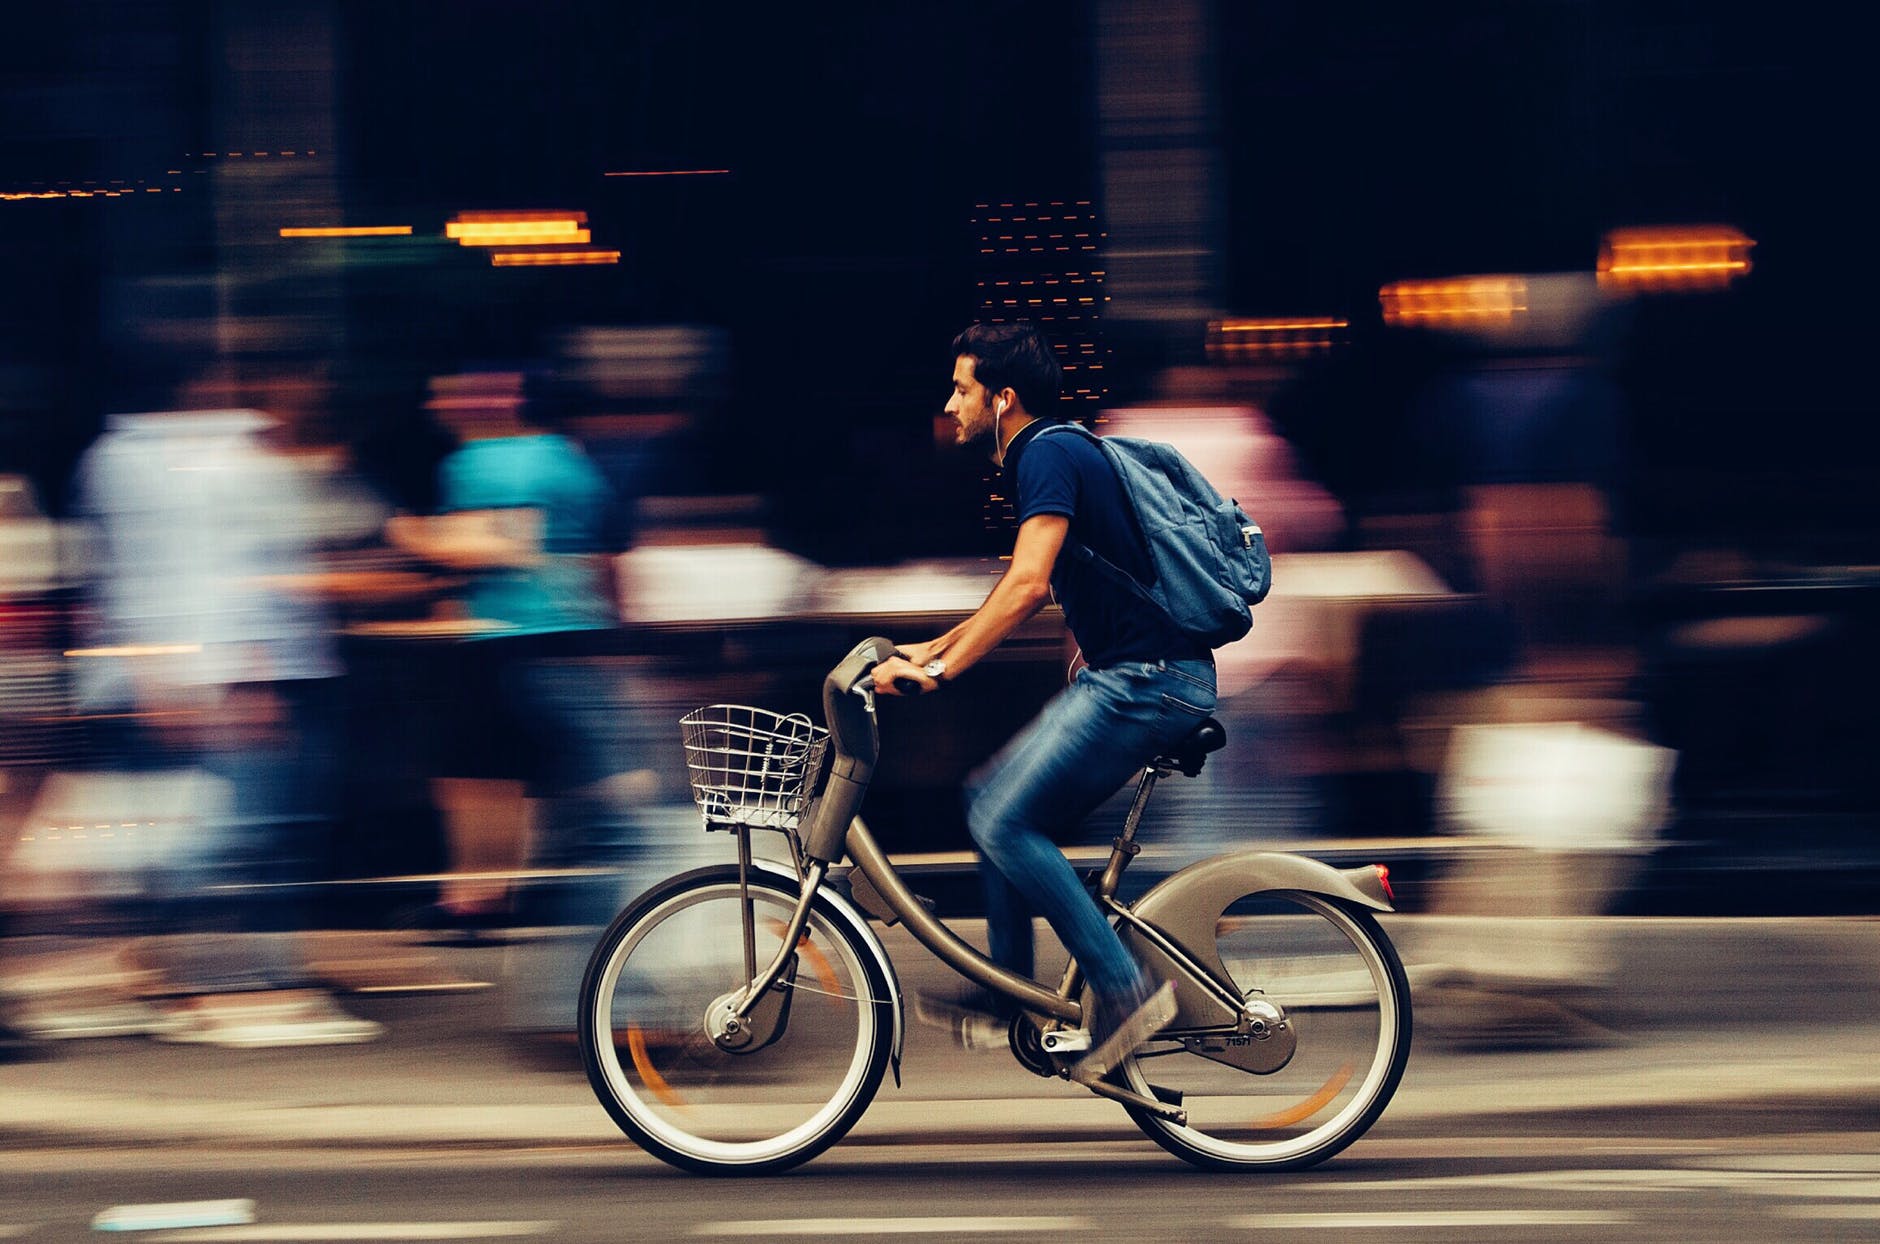 man riding bicycle on city street